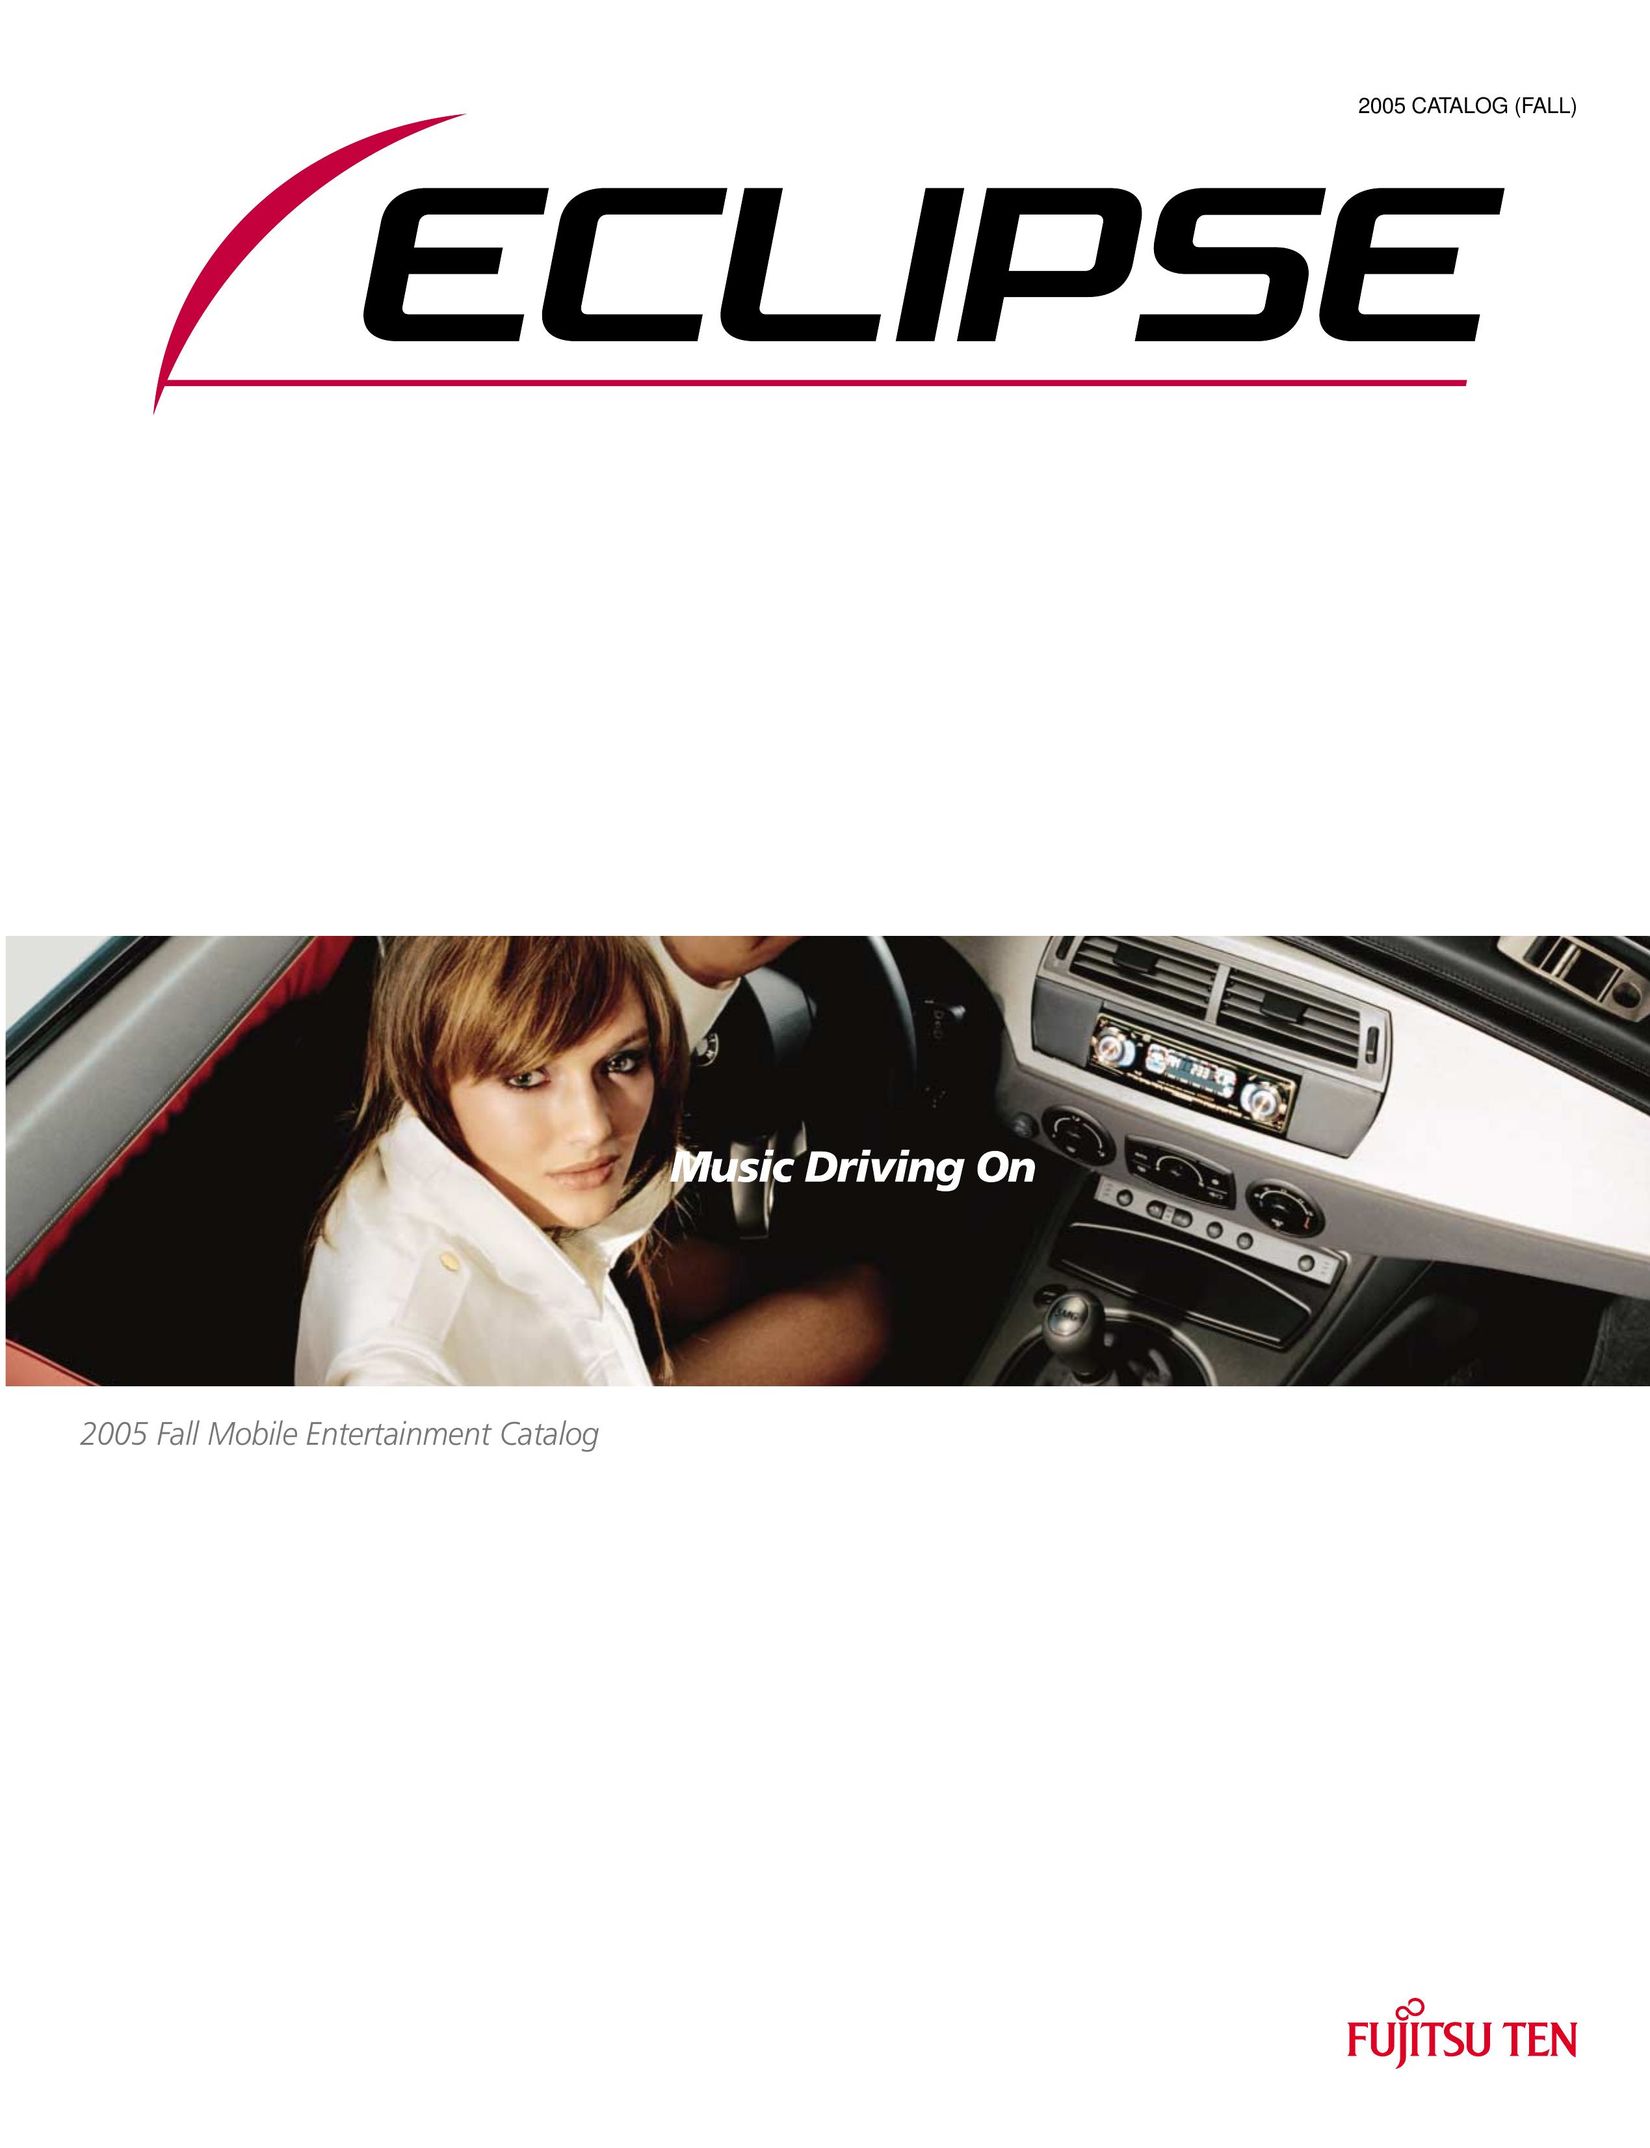 Eclipse - Fujitsu Ten AVN7000 MP3 Player User Manual